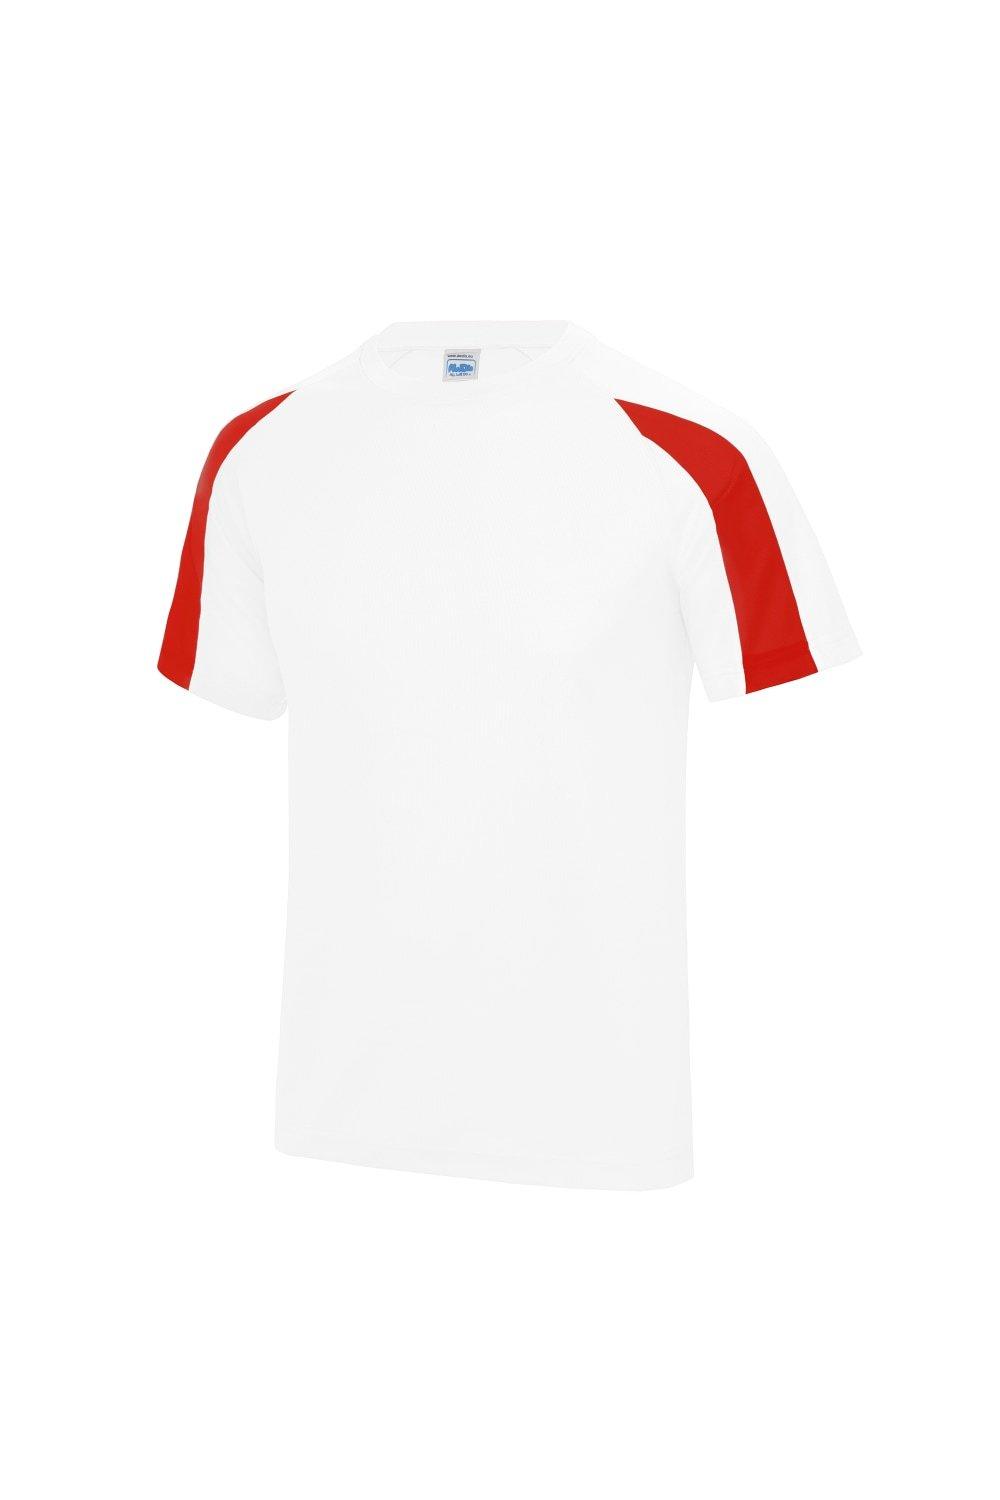 Just Cool Contrast Plain Sports T-Shirt